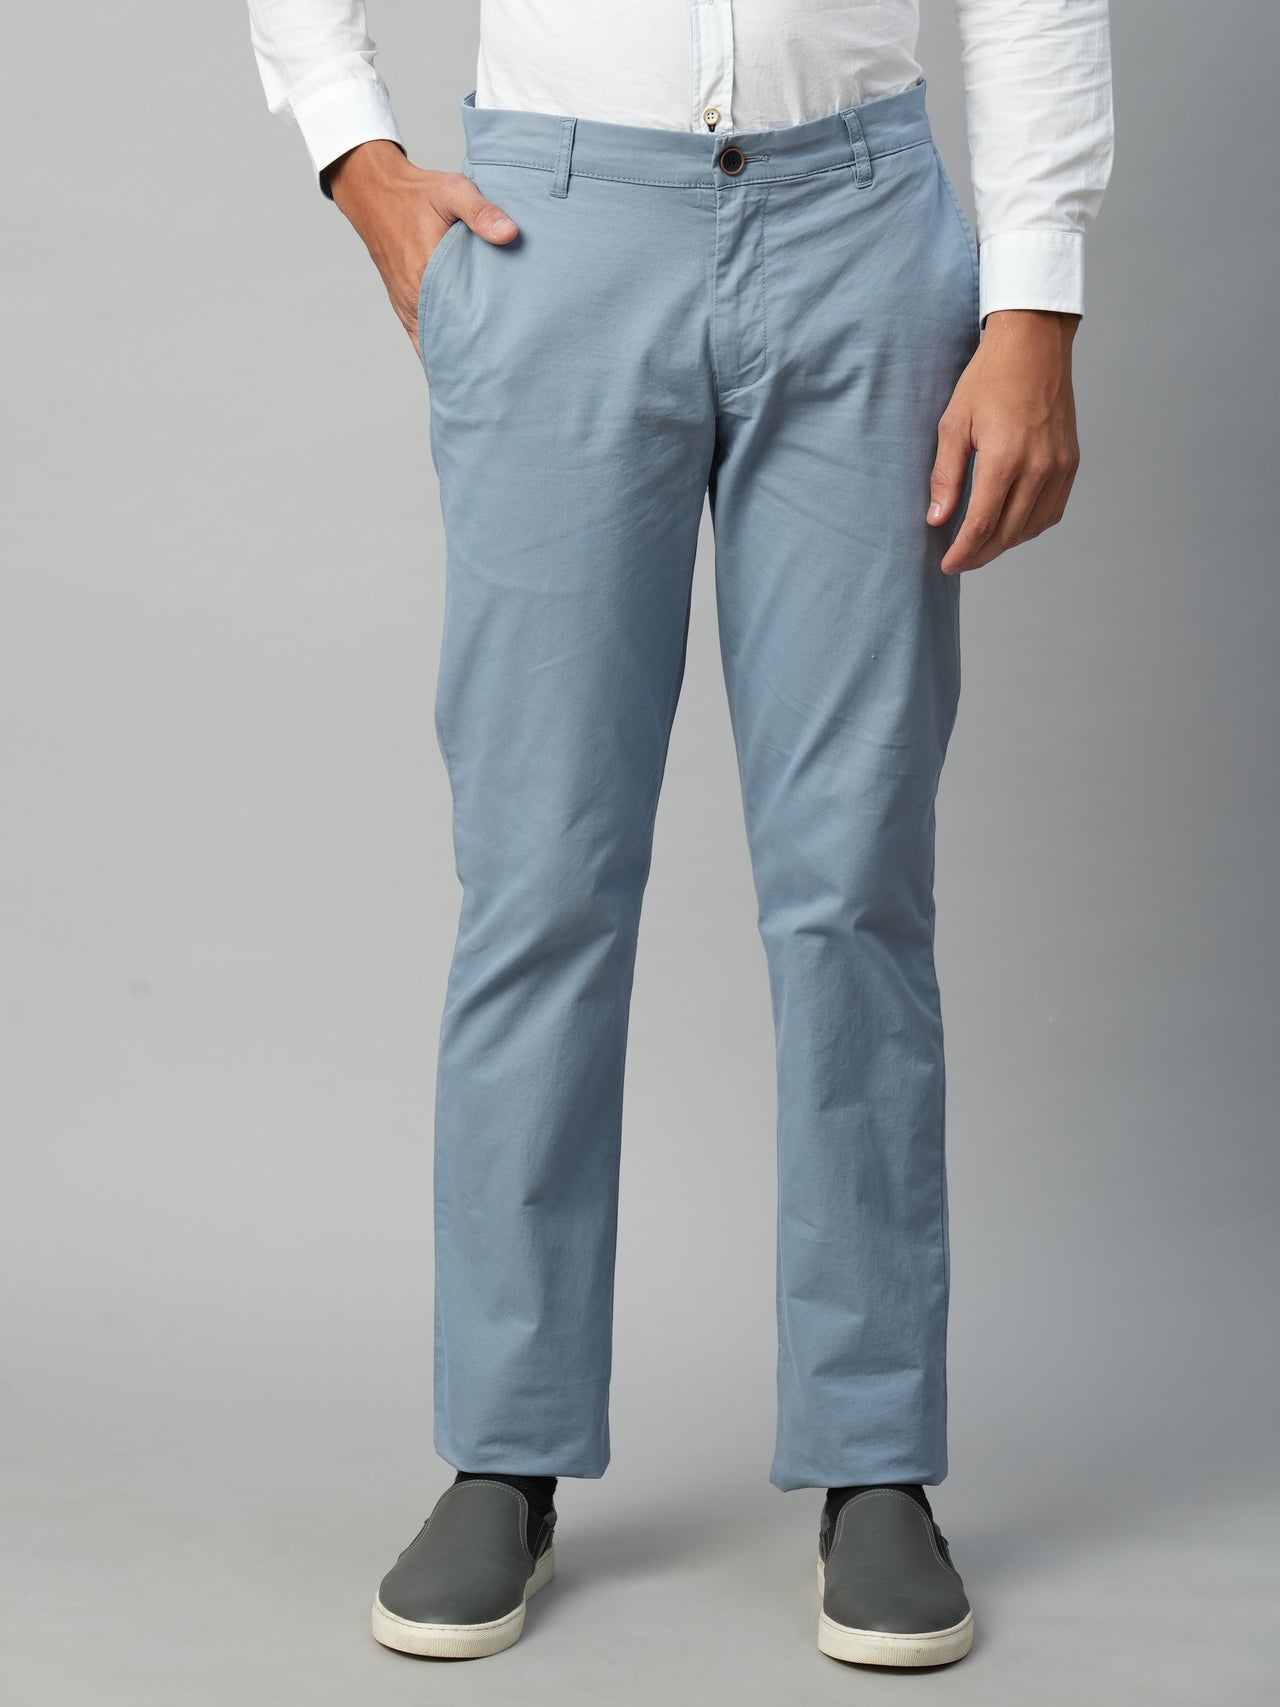 Men's Cotton Lycra Greyish Bl Regular Fit Pant